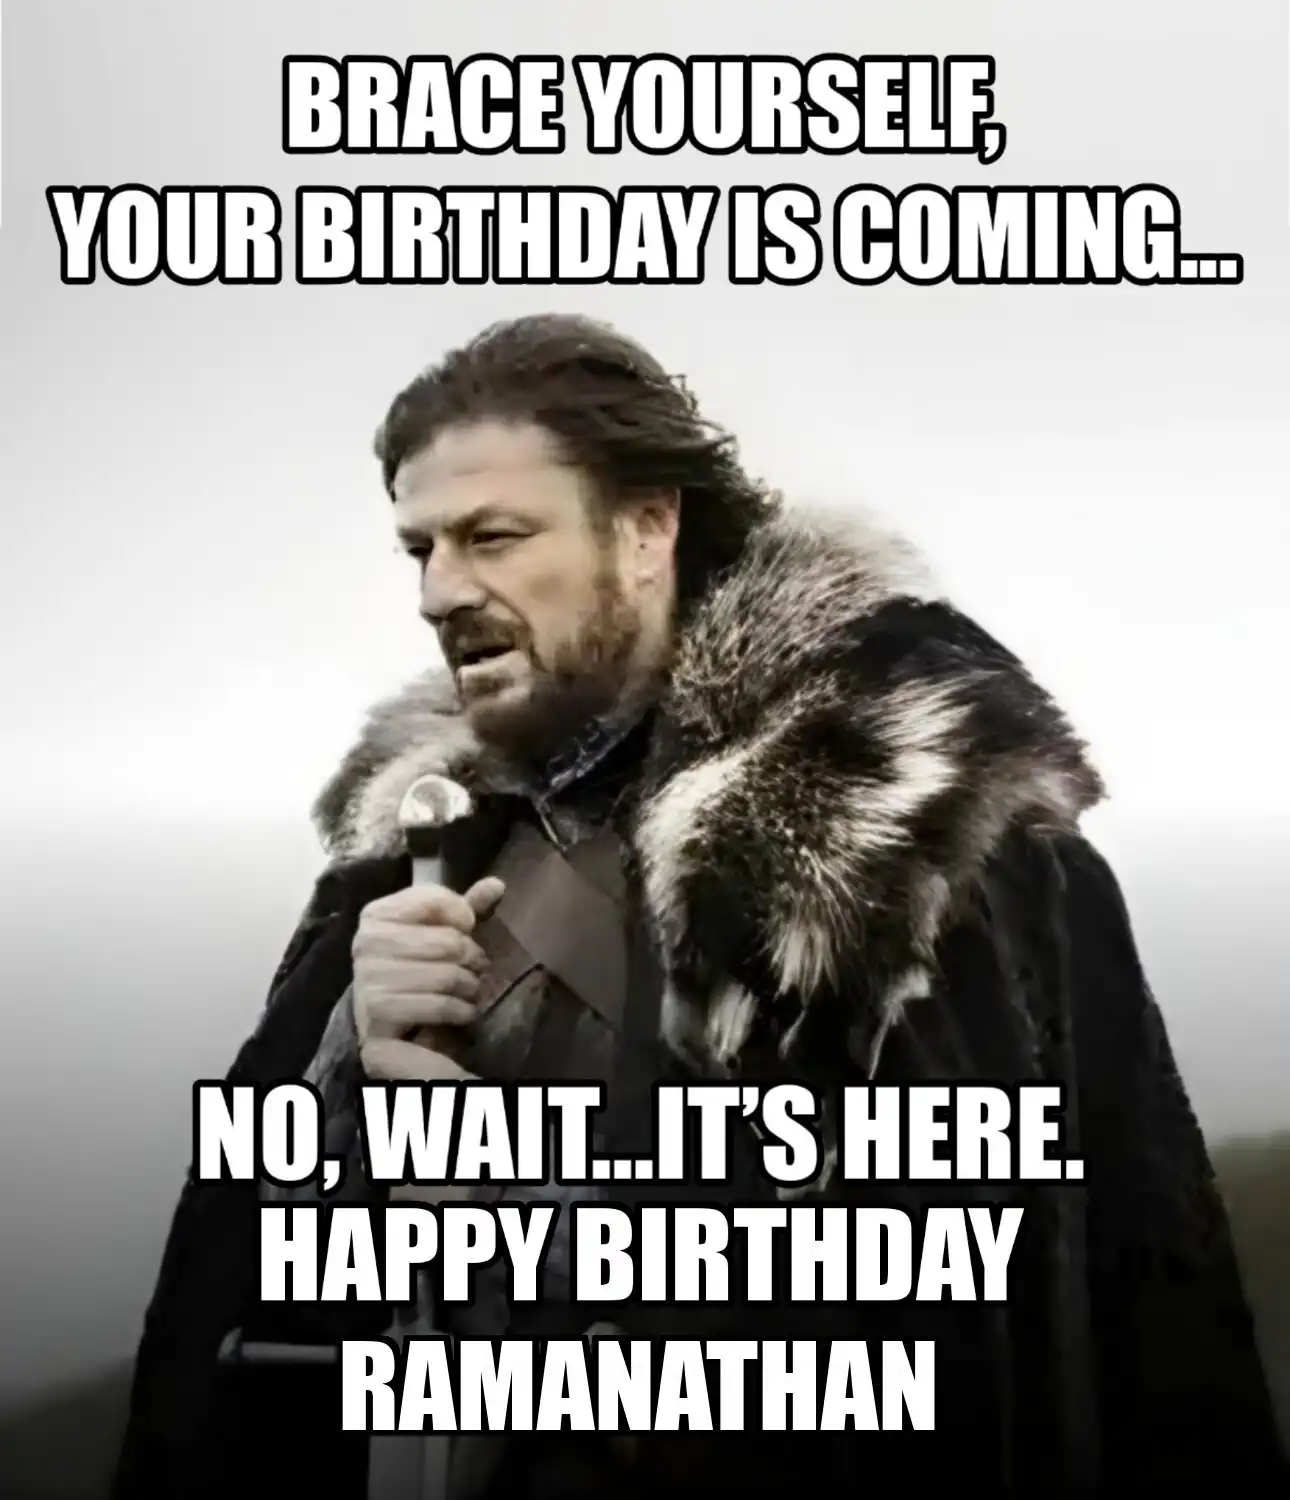 Happy Birthday Ramanathan Brace Yourself Your Birthday Is Coming Meme